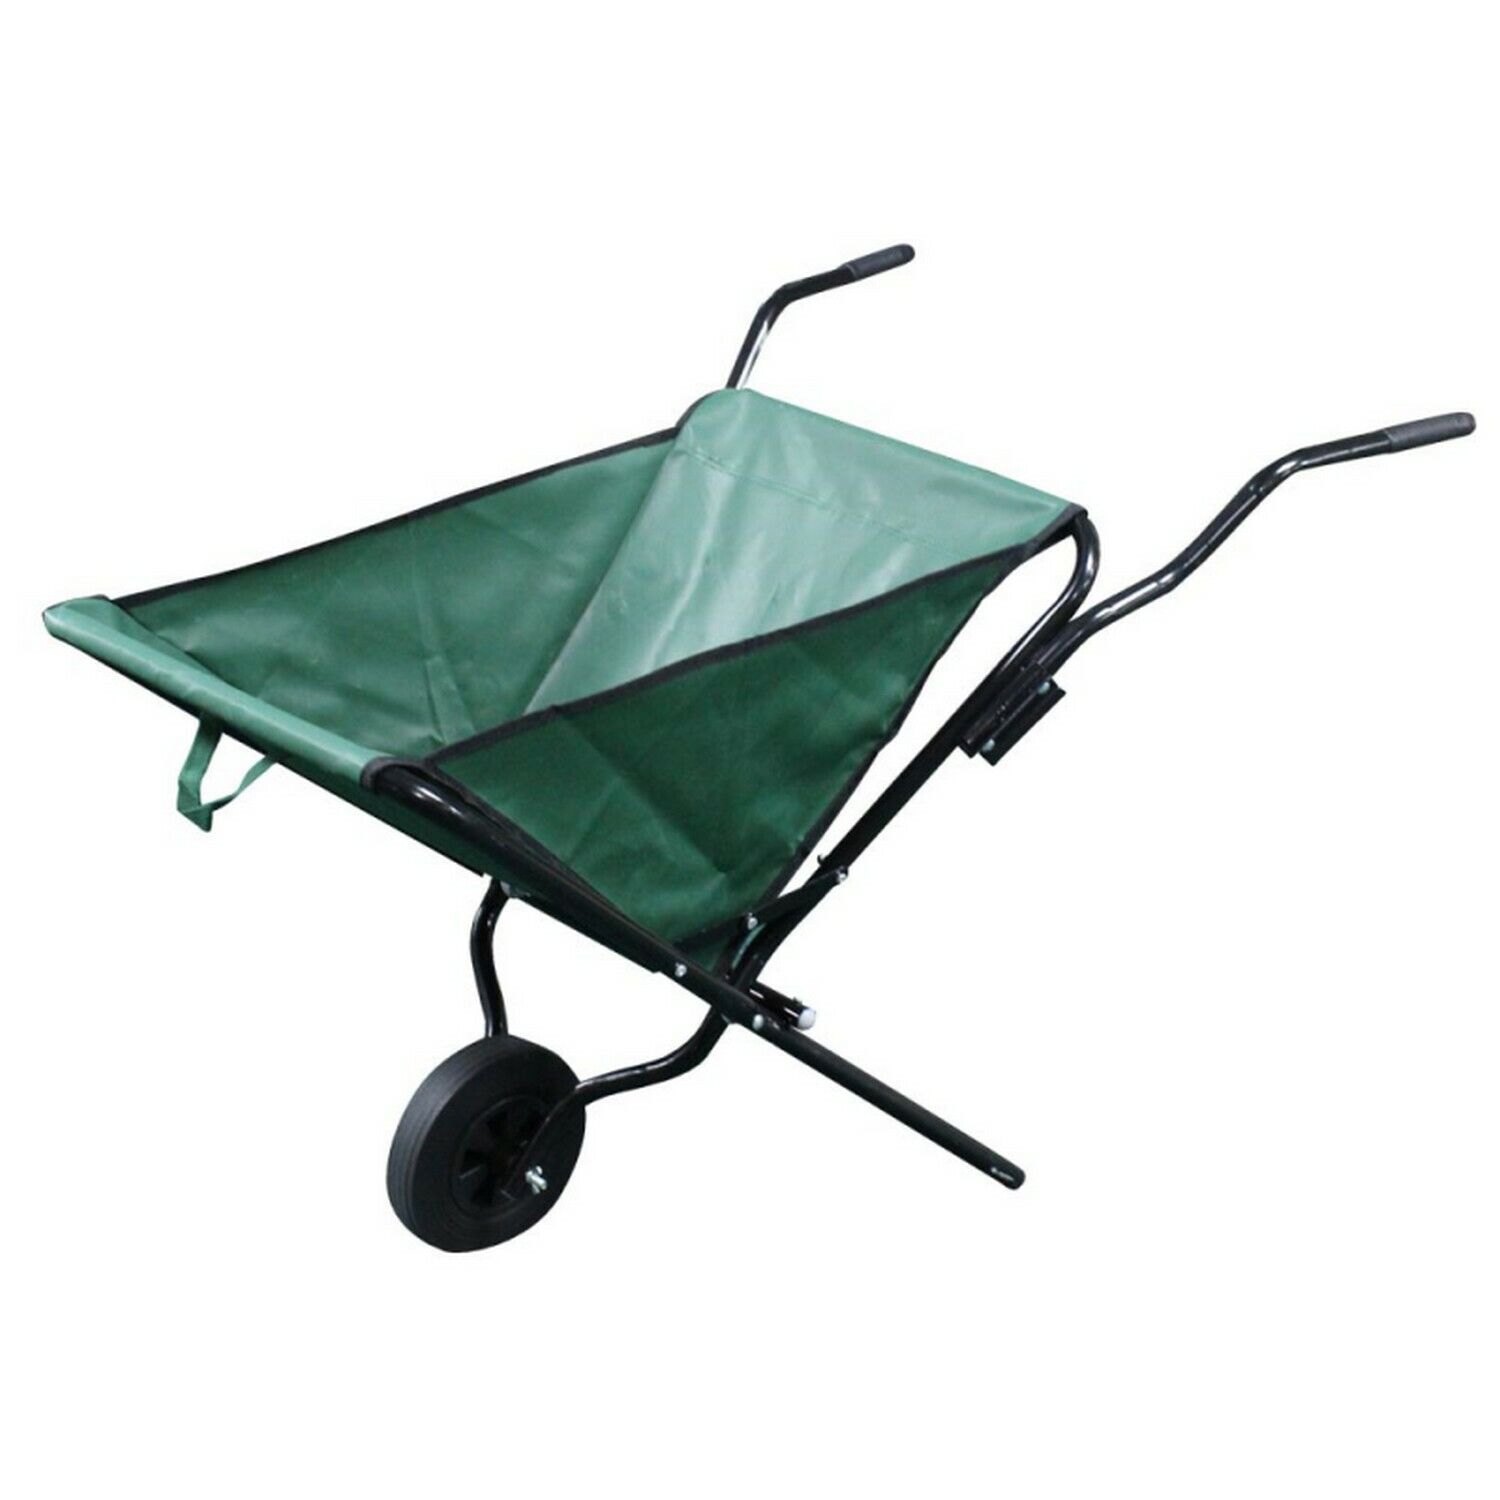 Kingfisher Garden Fold Up Wheel Barrow Garden Push Cart Outdoor Handcart Home 5399